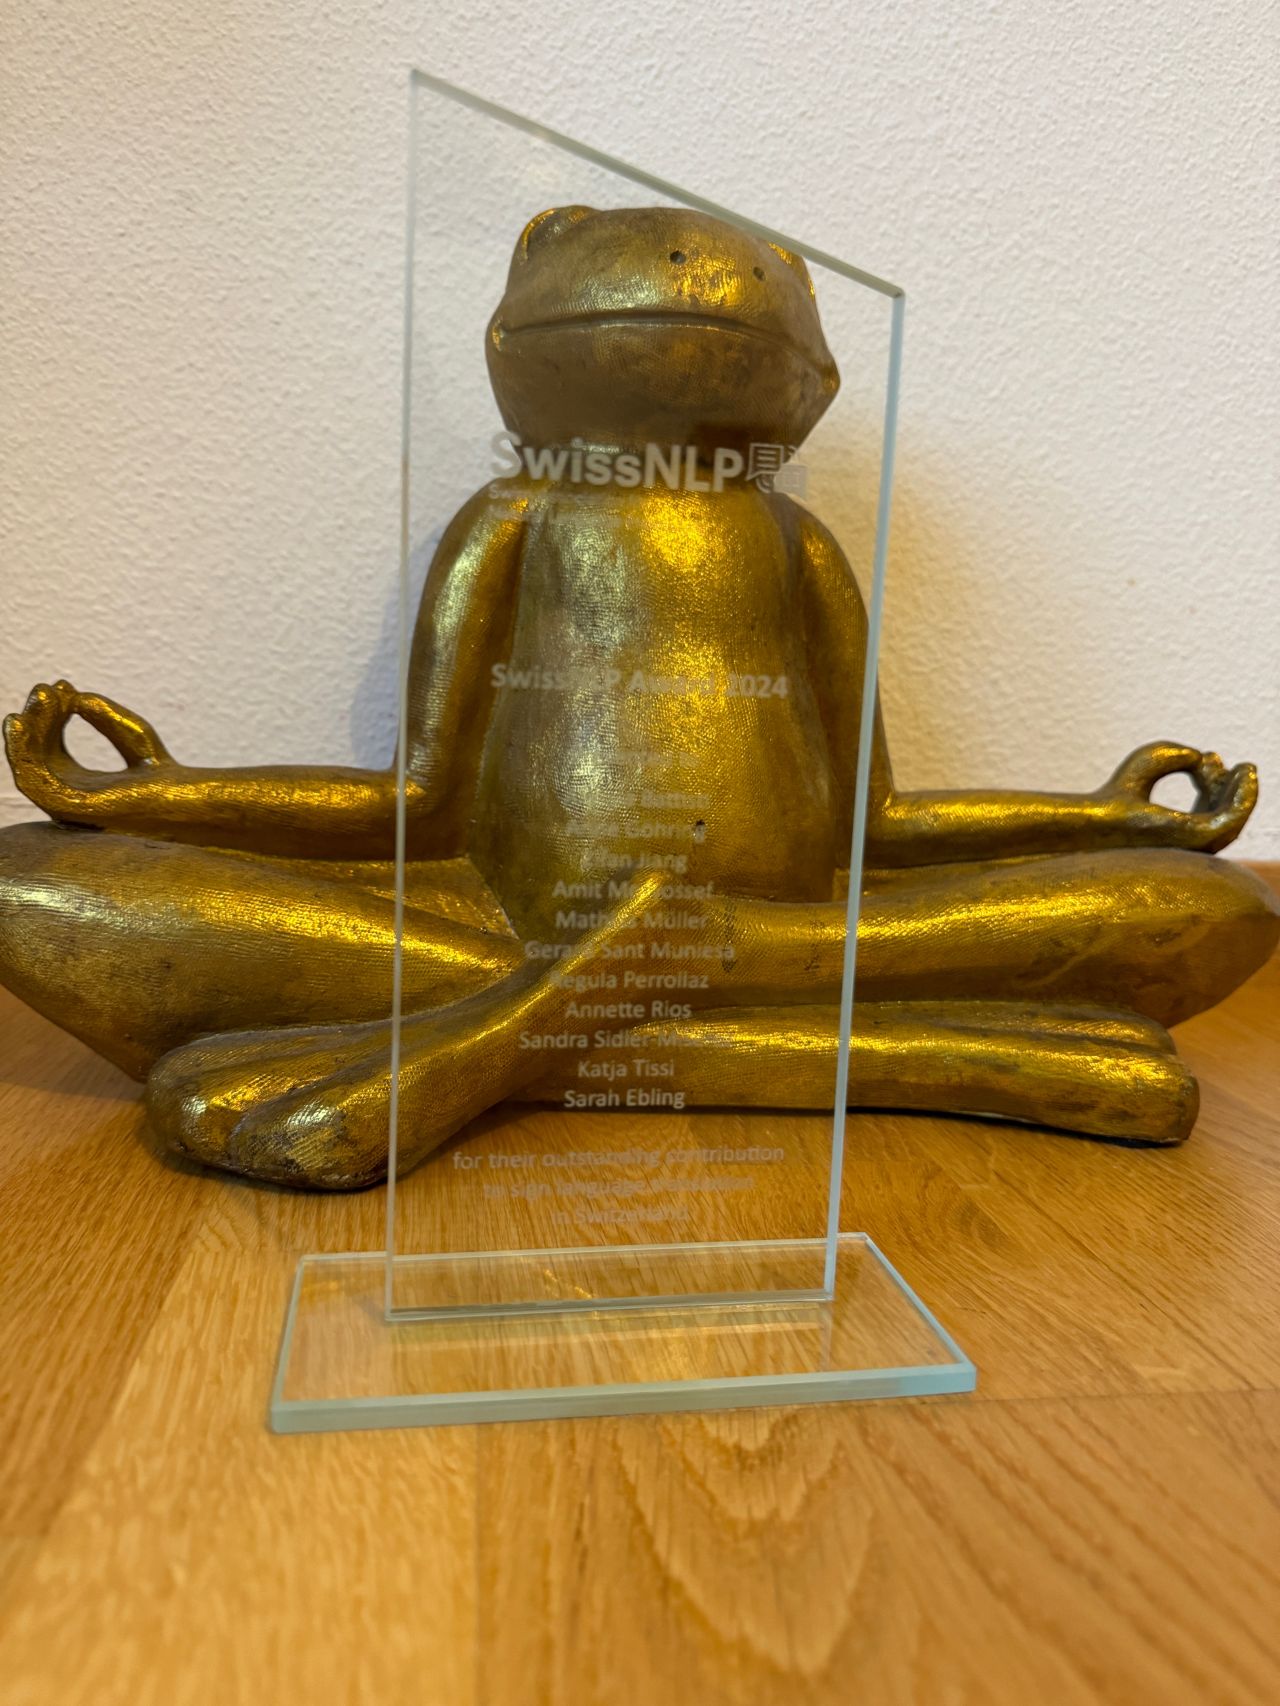 SwissNLP Award